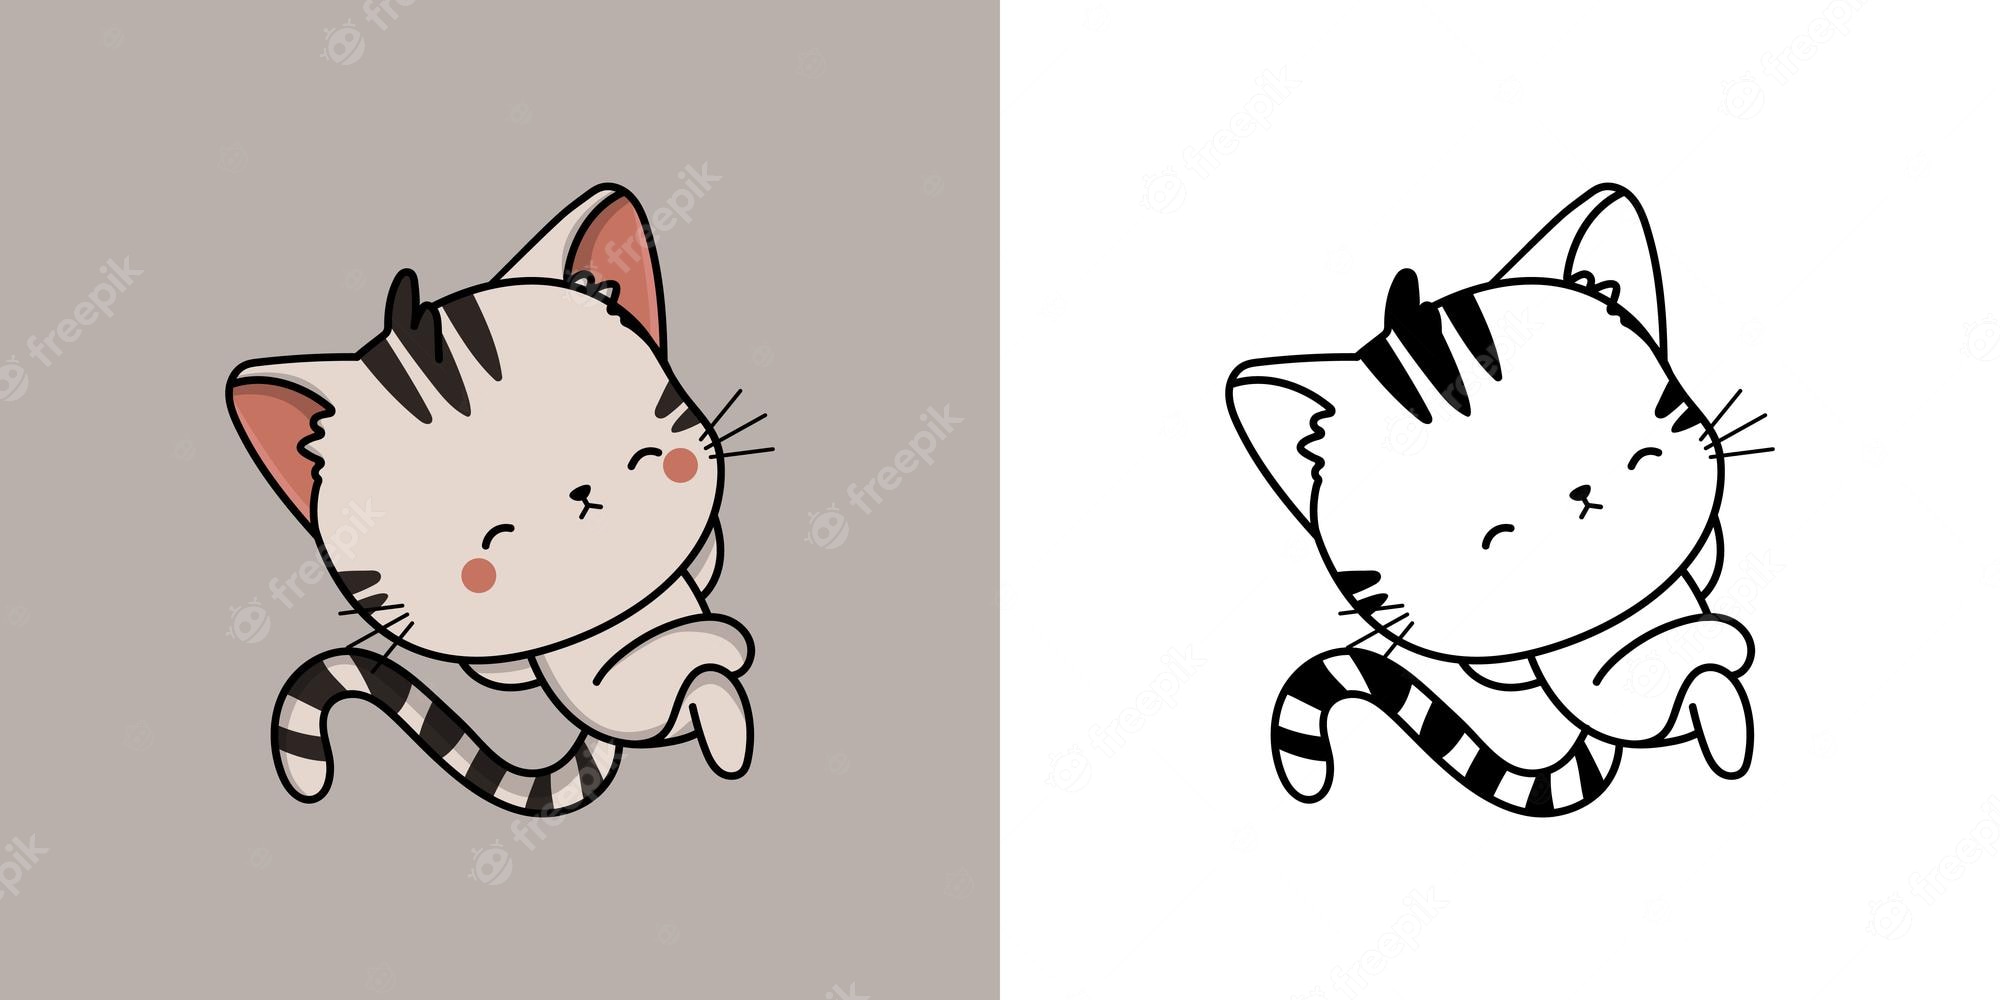 Clipart American Shorthair Cat Multicolored Black White Cute Clip Art Kitten 289115 1203 